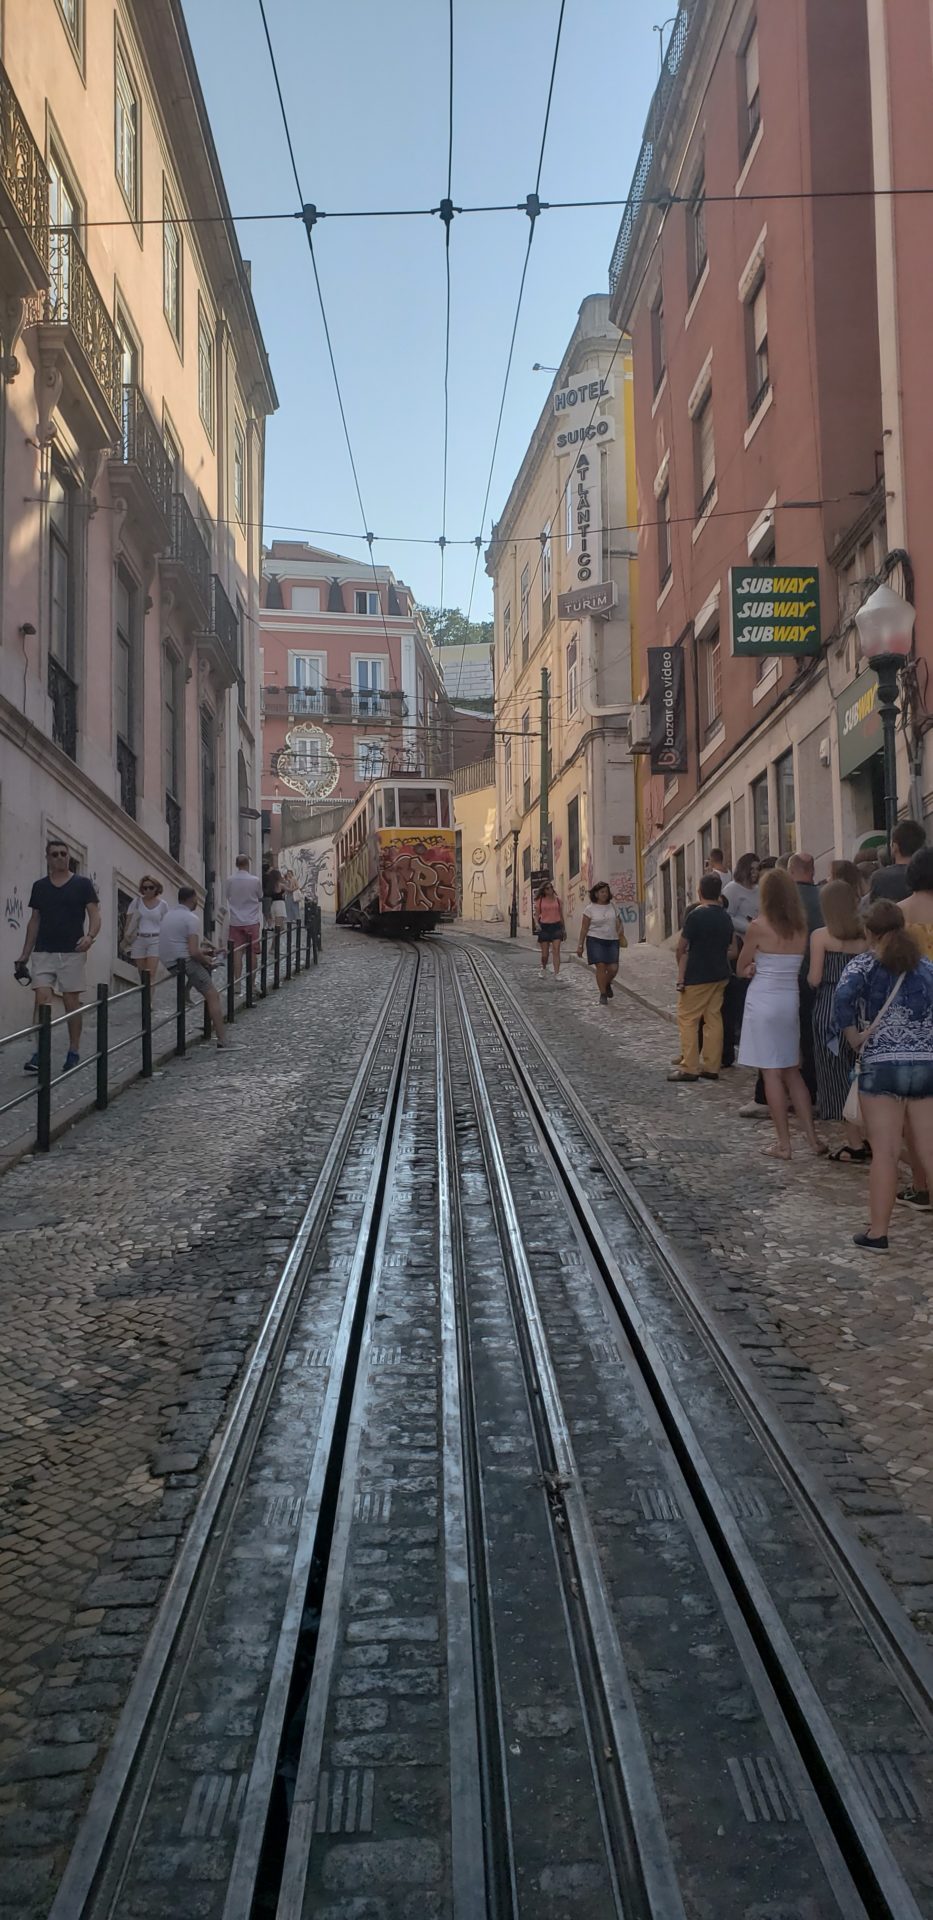 a train tracks in a city